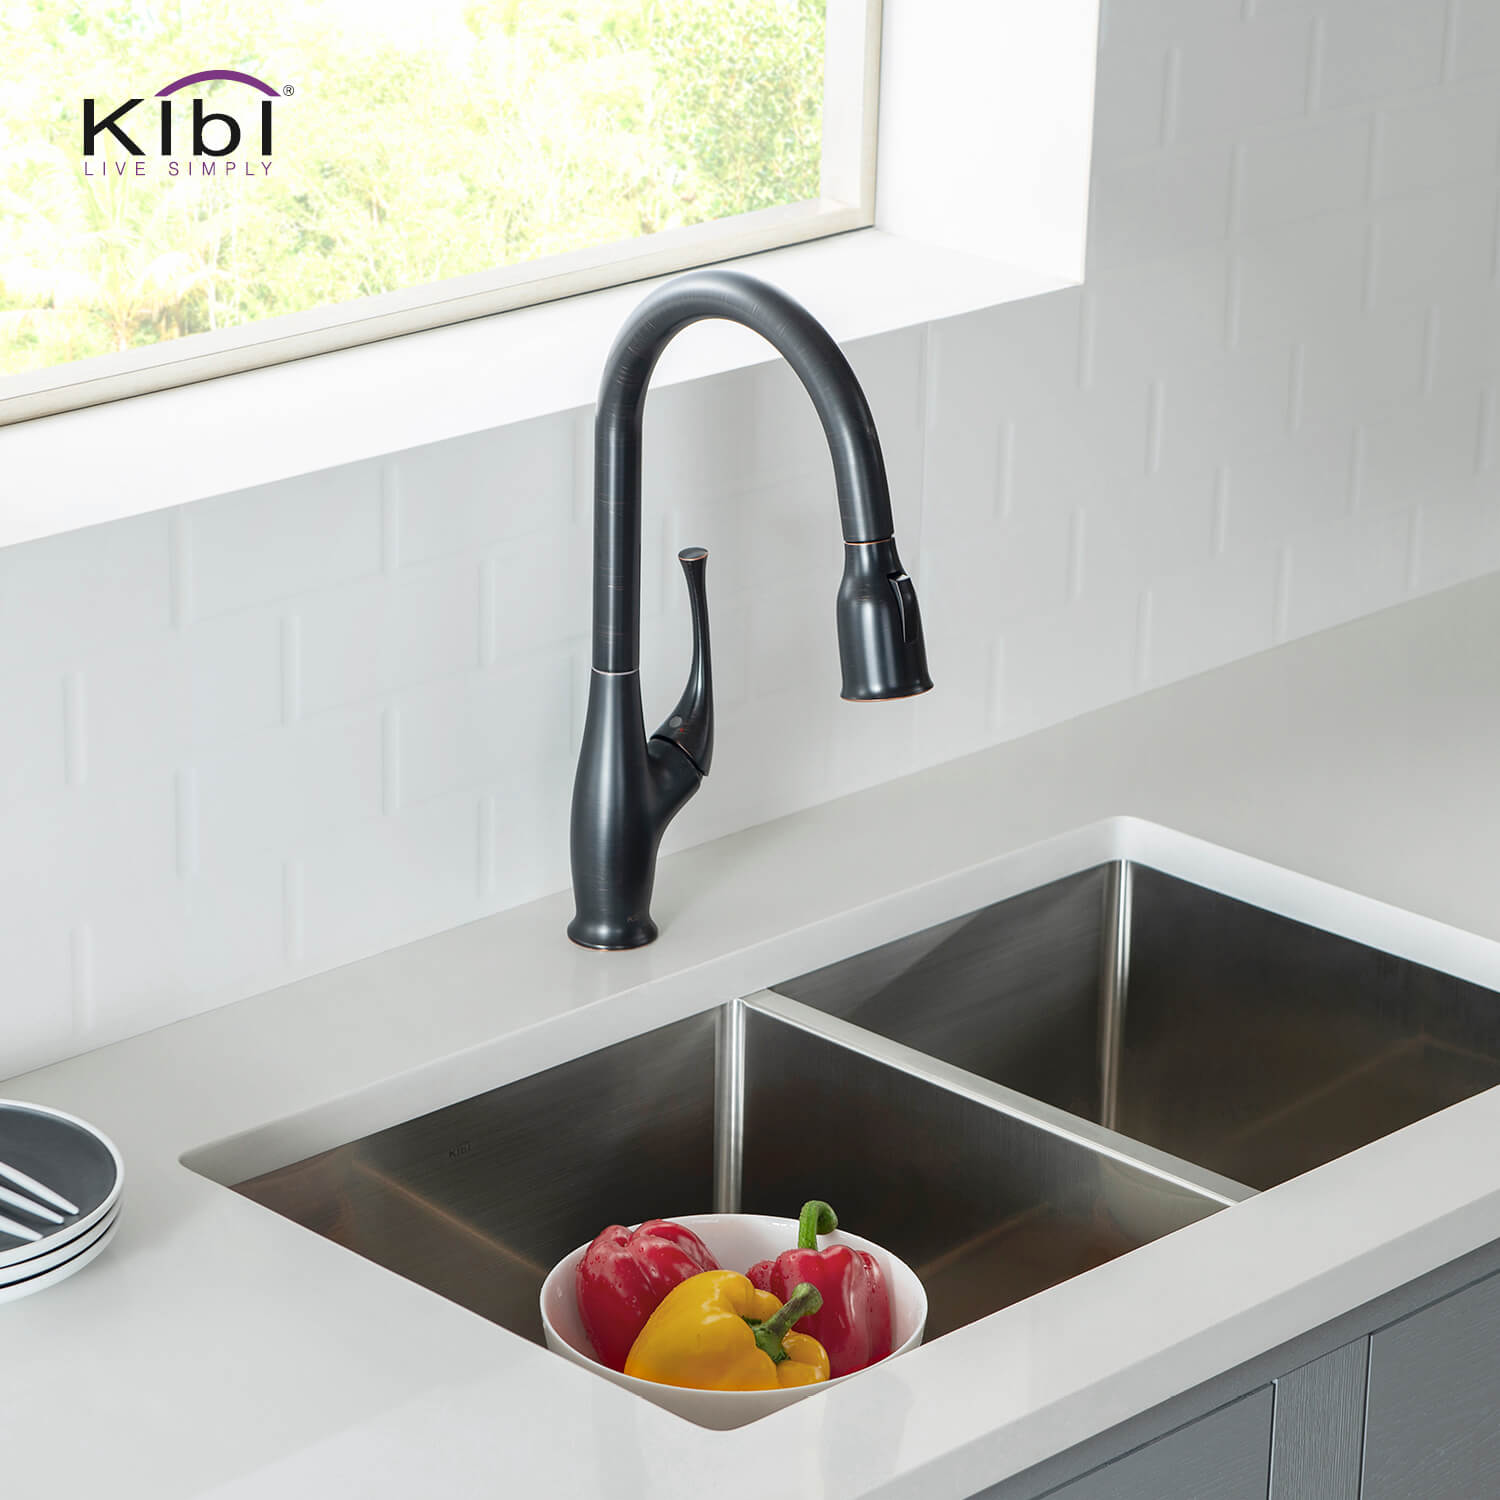 Kibi Cedar Single Handle High Arc Pull Down Kitchen Faucet With Soap Dispenser in Oil Rubbed Bronze Finish